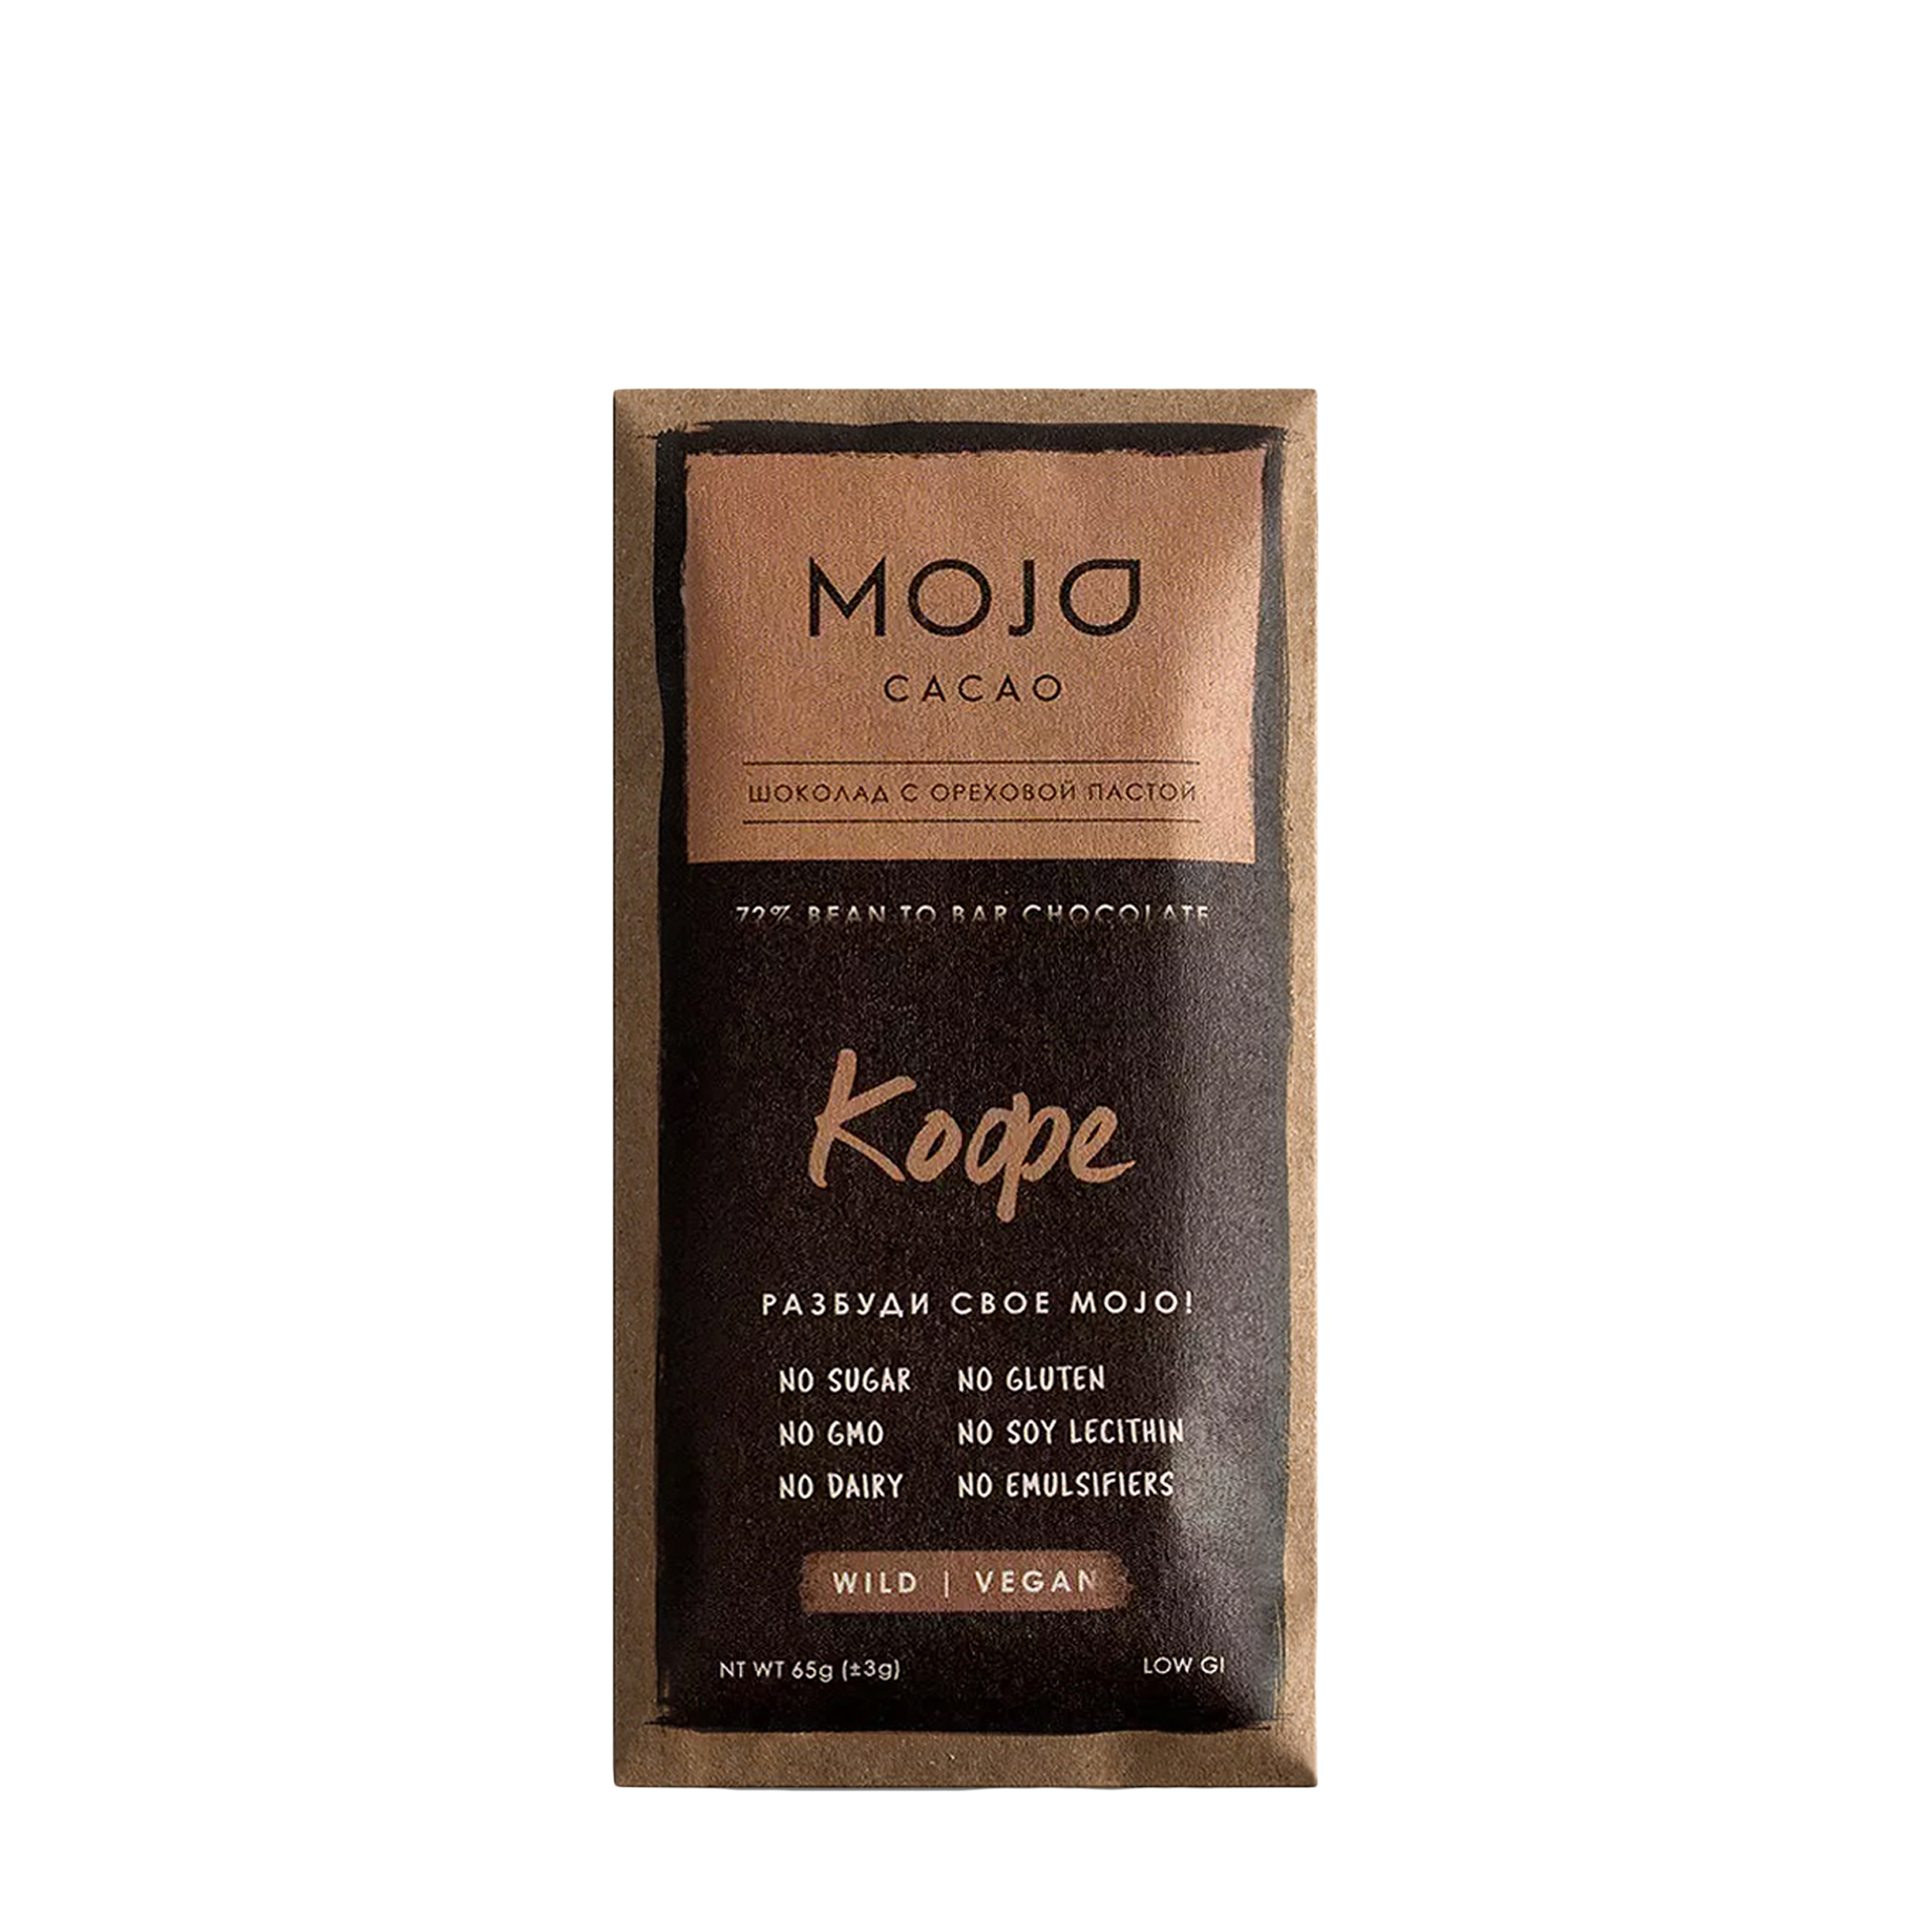 Mojo Cacao Mojo Cacao Горький шоколад (72%) с шоколадно-ореховой пастой «Кофе» 65 гр MojoCacao23 Горький шоколад (72%) с шоколадно-ореховой пастой «Кофе» 65 гр - фото 1